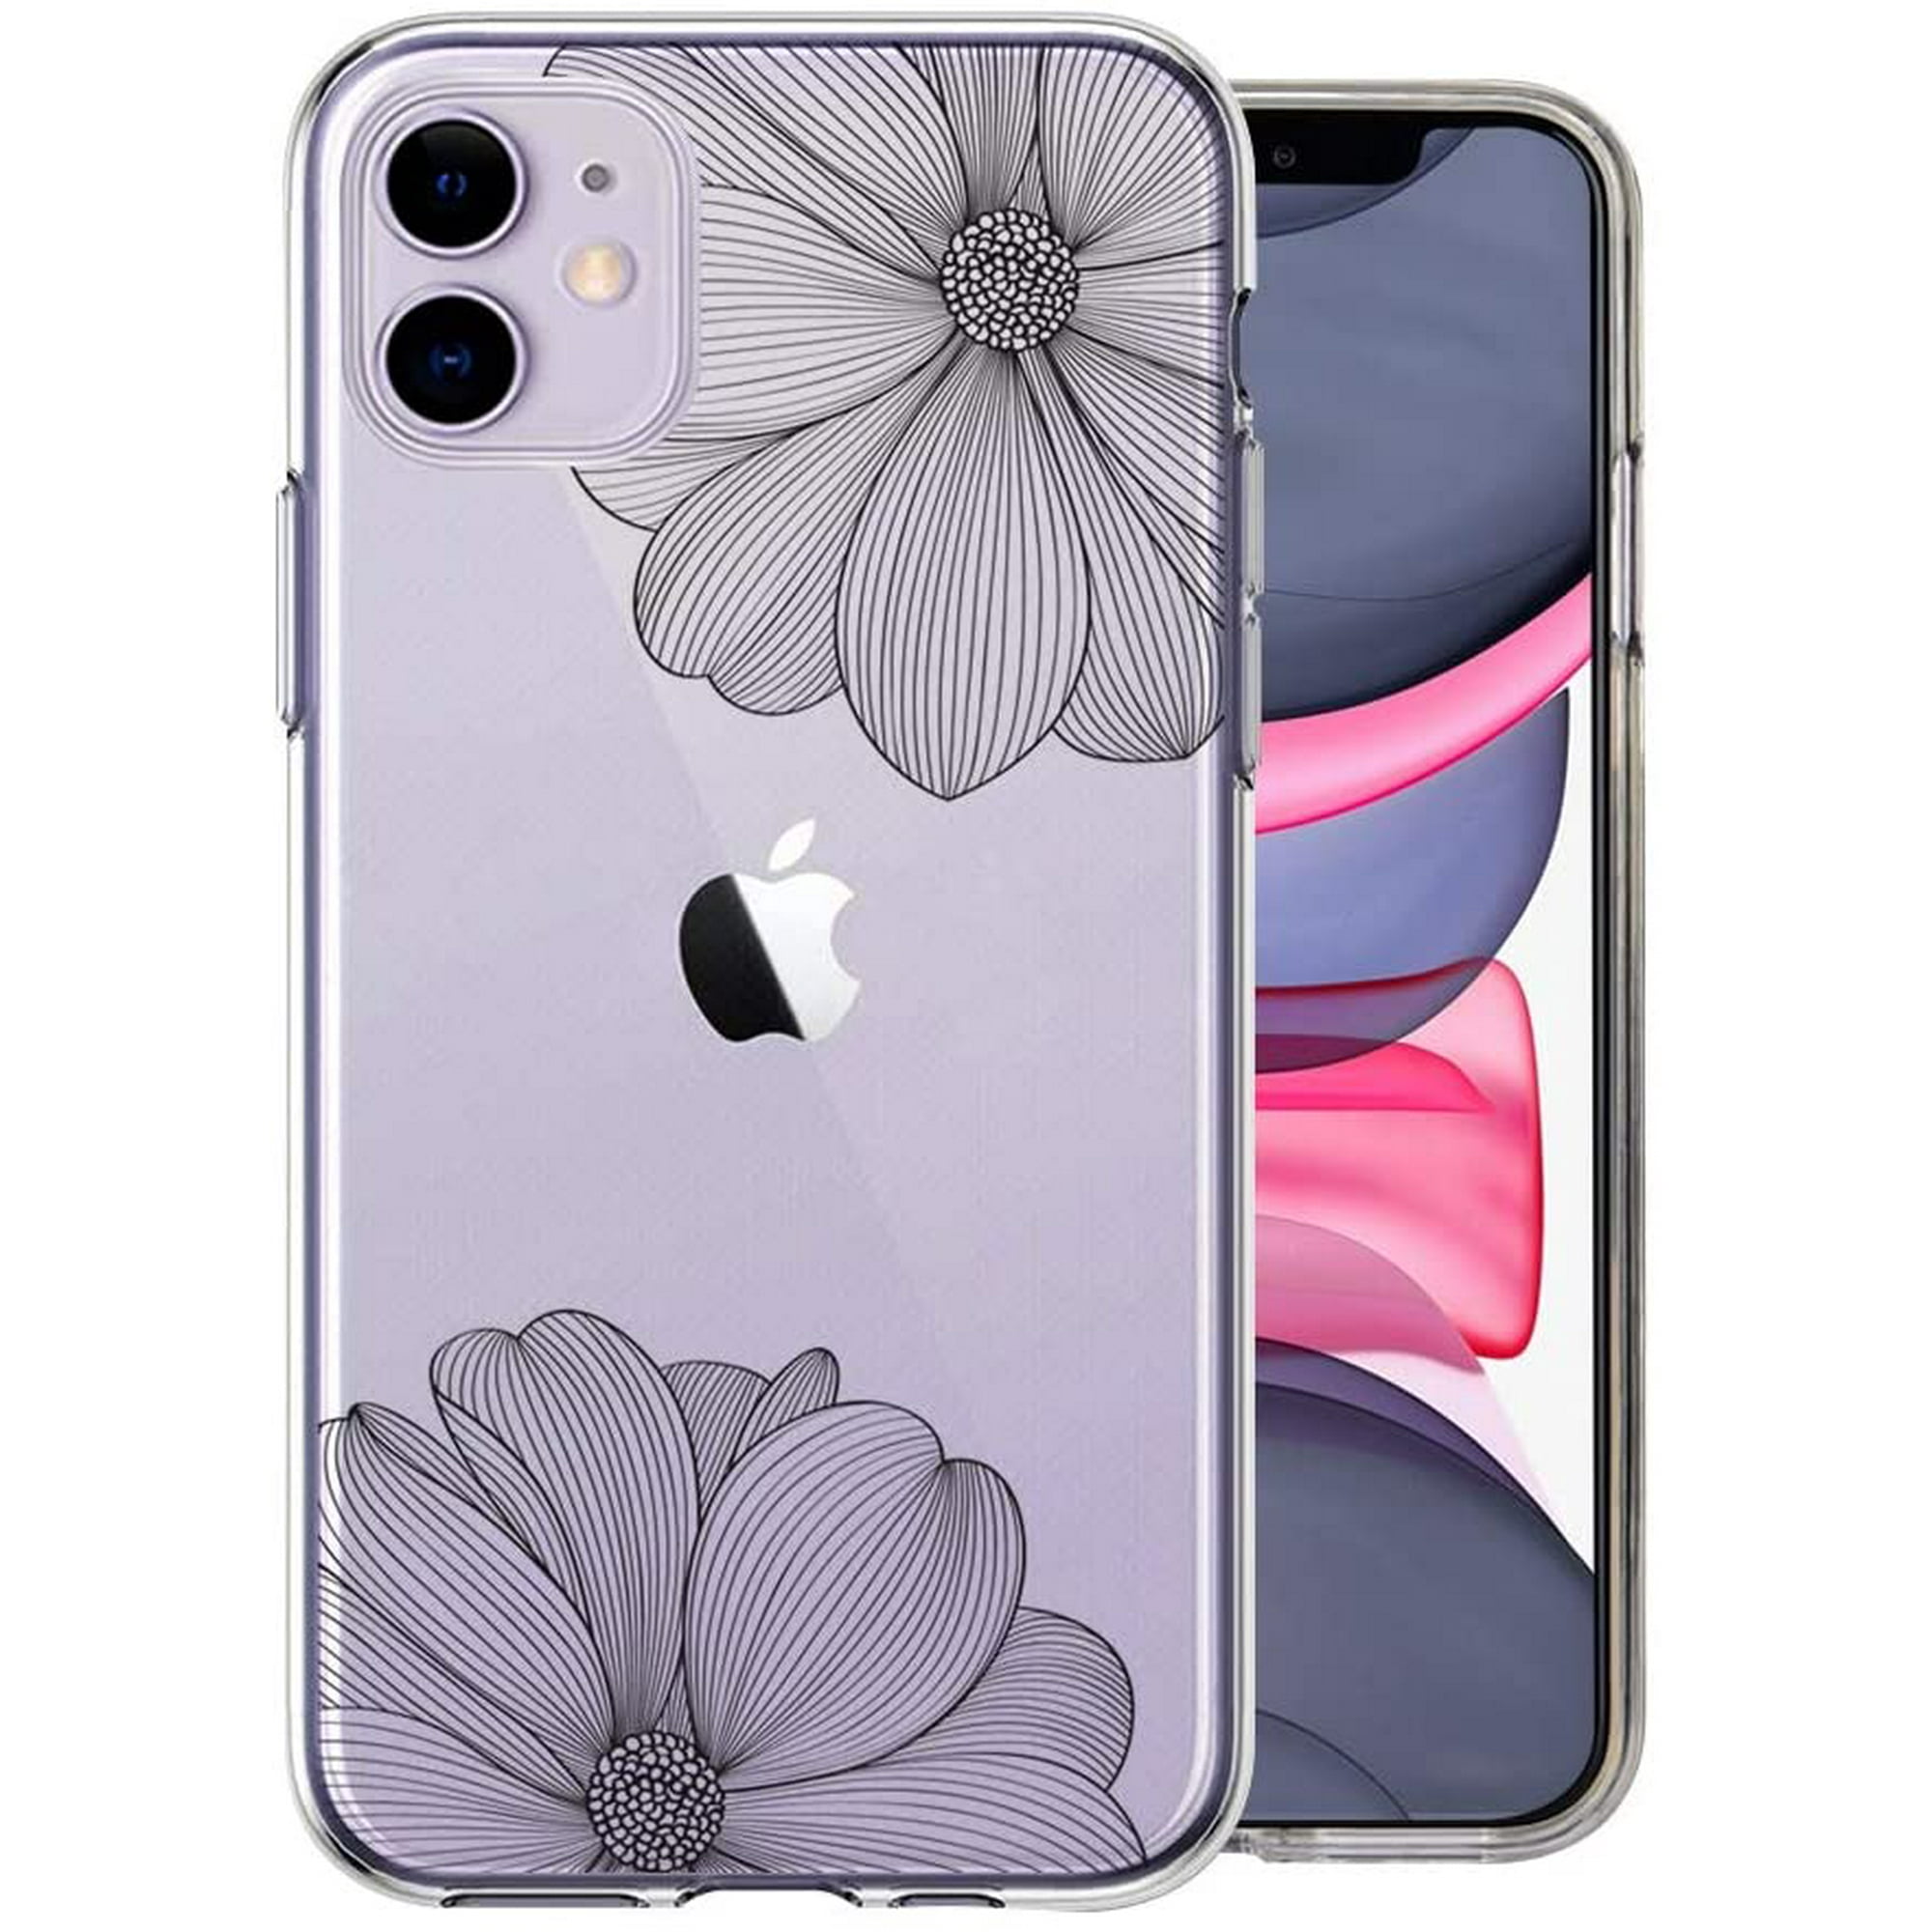 Kexaar Iphone 11 Case Clear Flower Design Soft Flexible Tpu Ultra Thin Shockproof Transparent Cute Floral Girls Walmart Canada